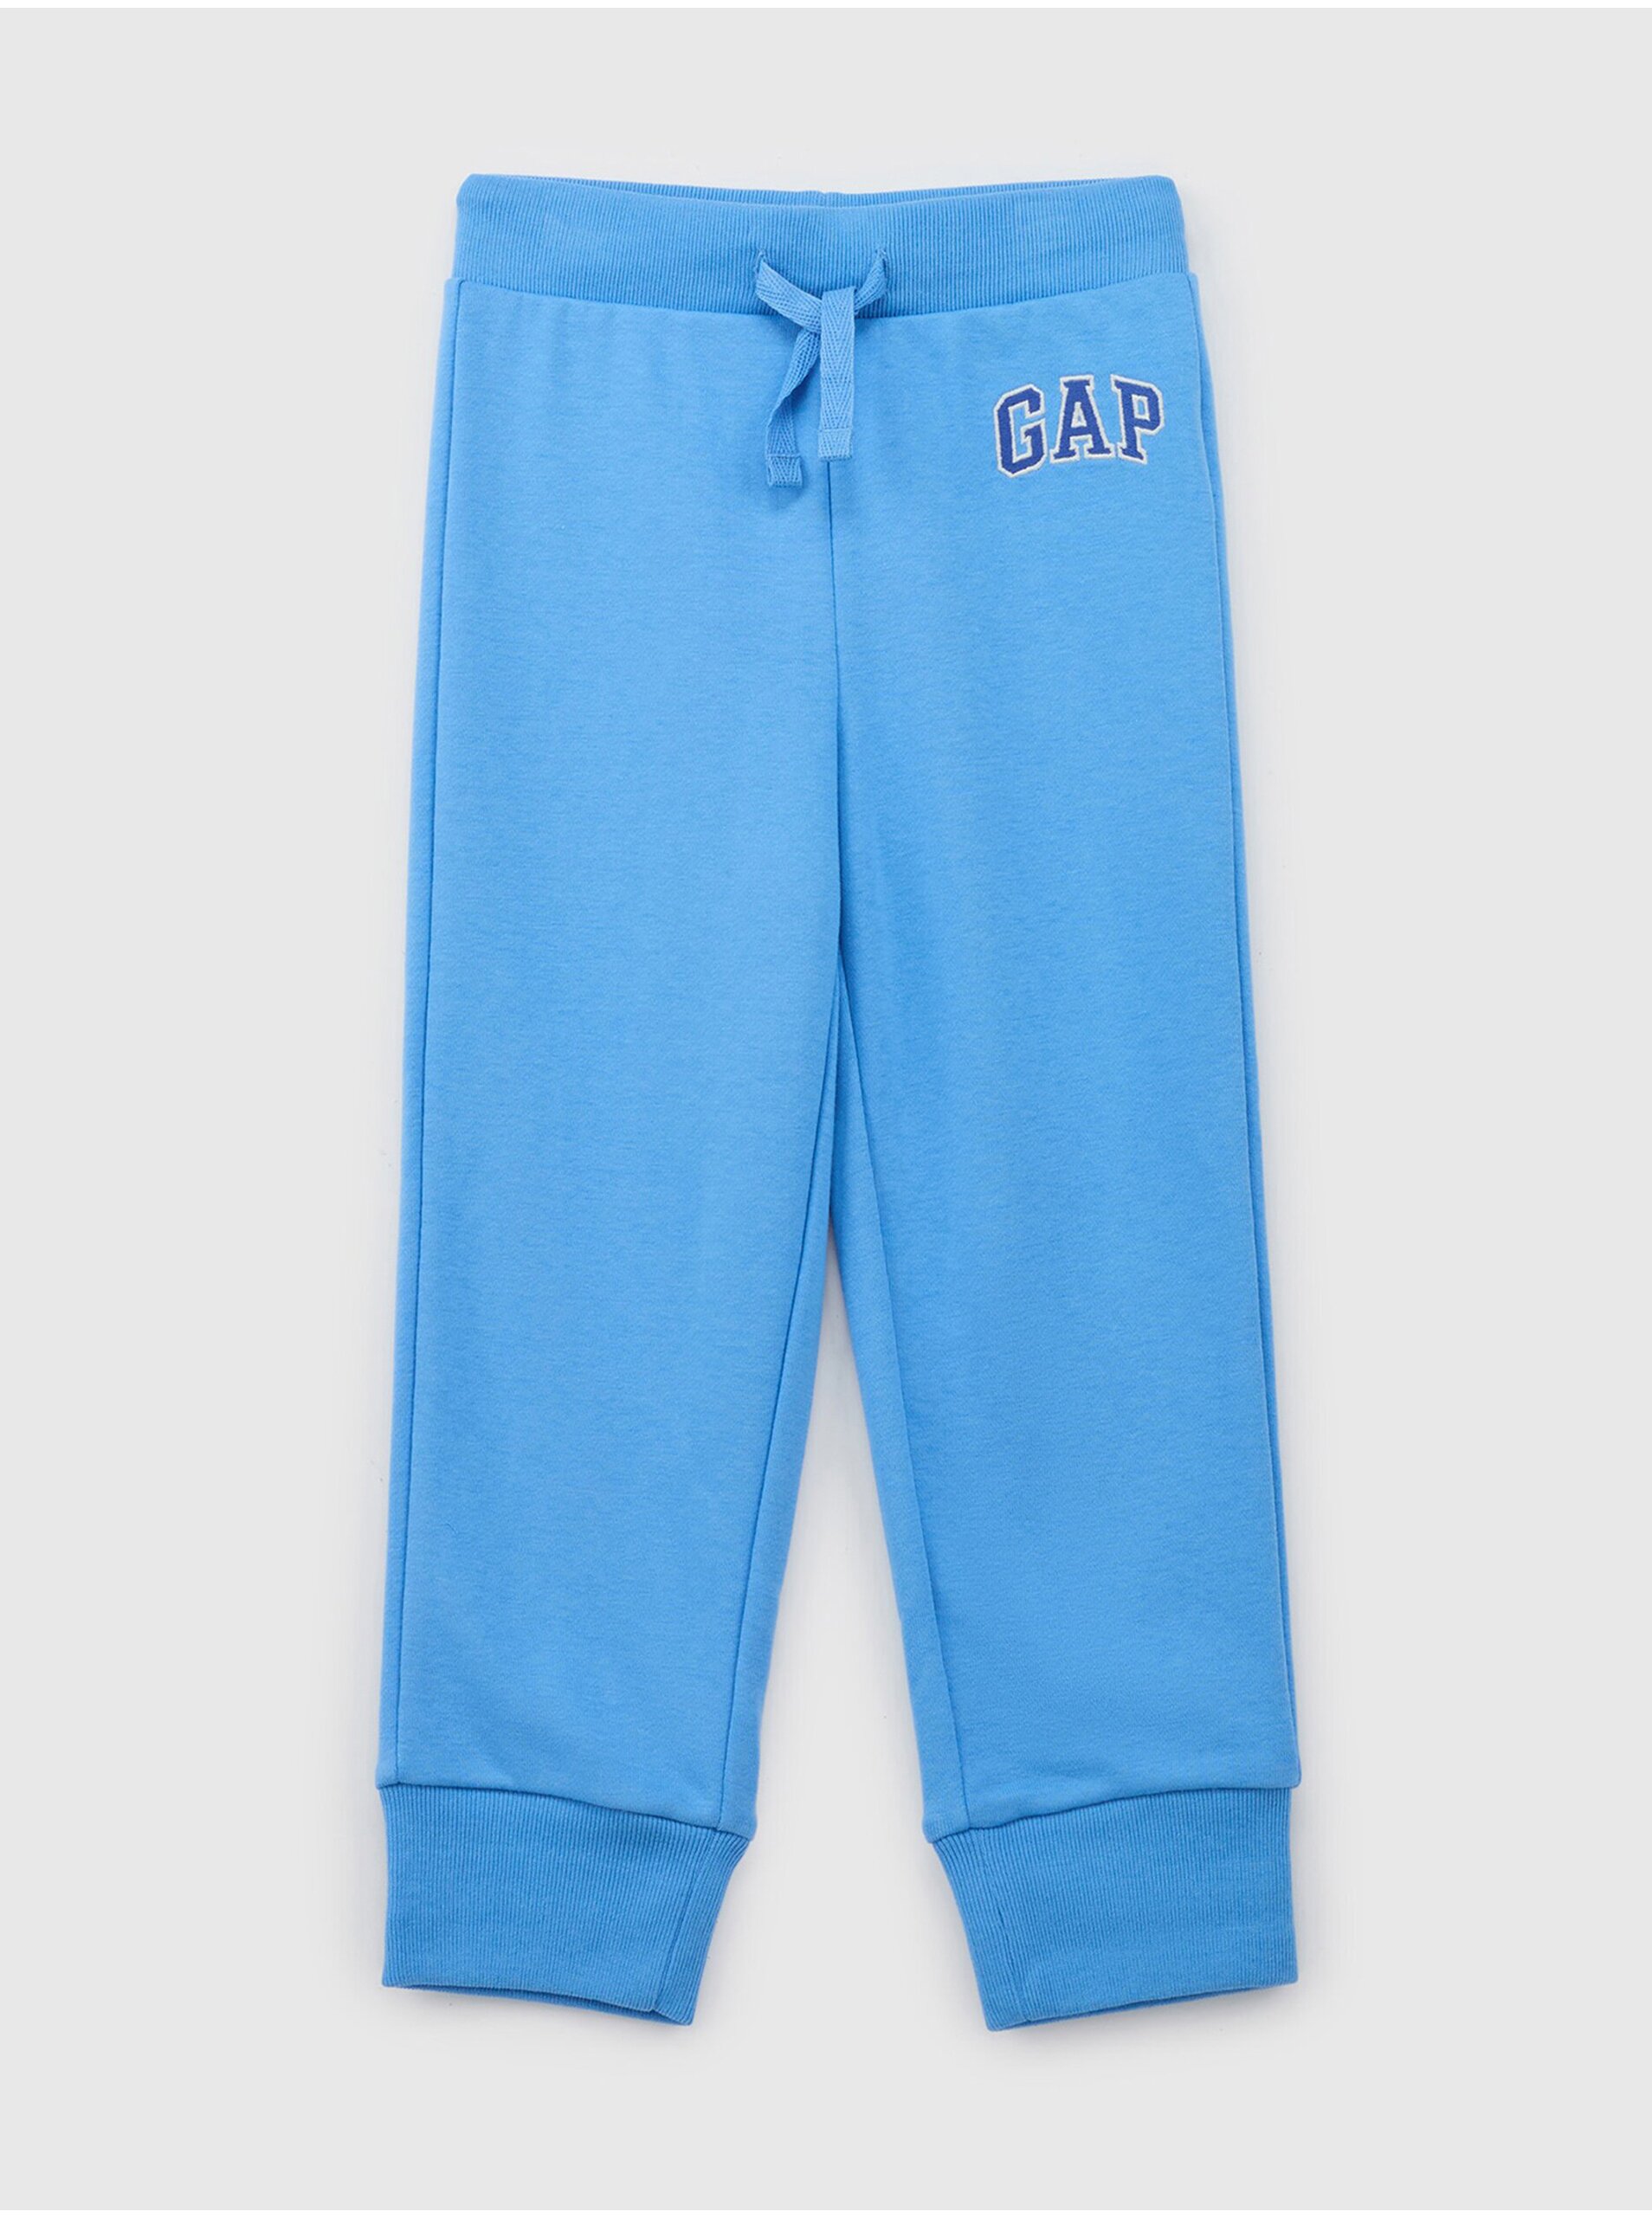 Lacno Modré chlapčenské tepláky s logom GAP